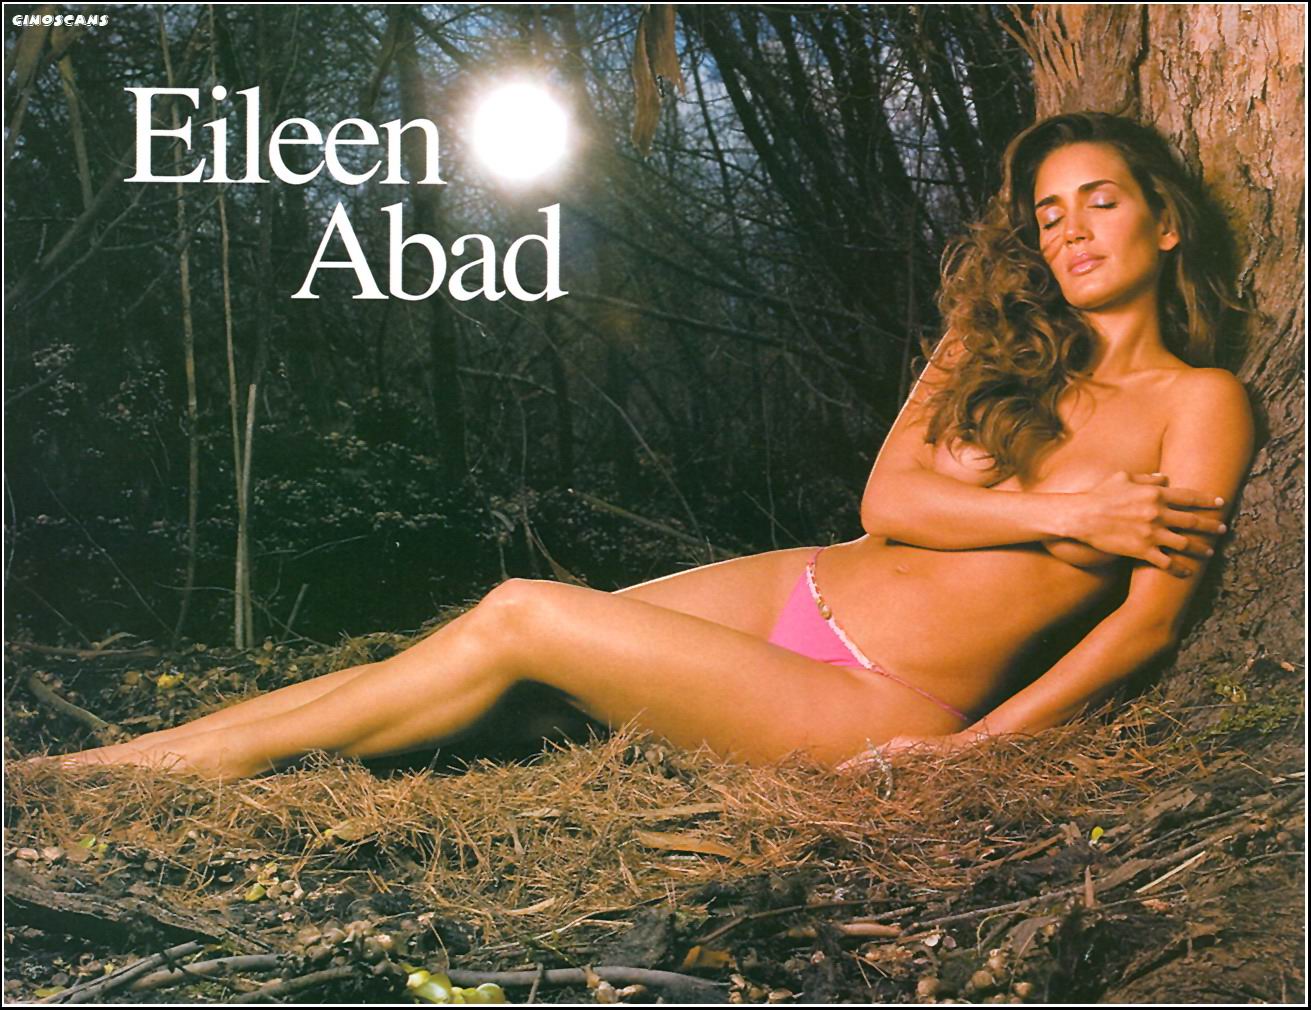 Eileen abad nackt